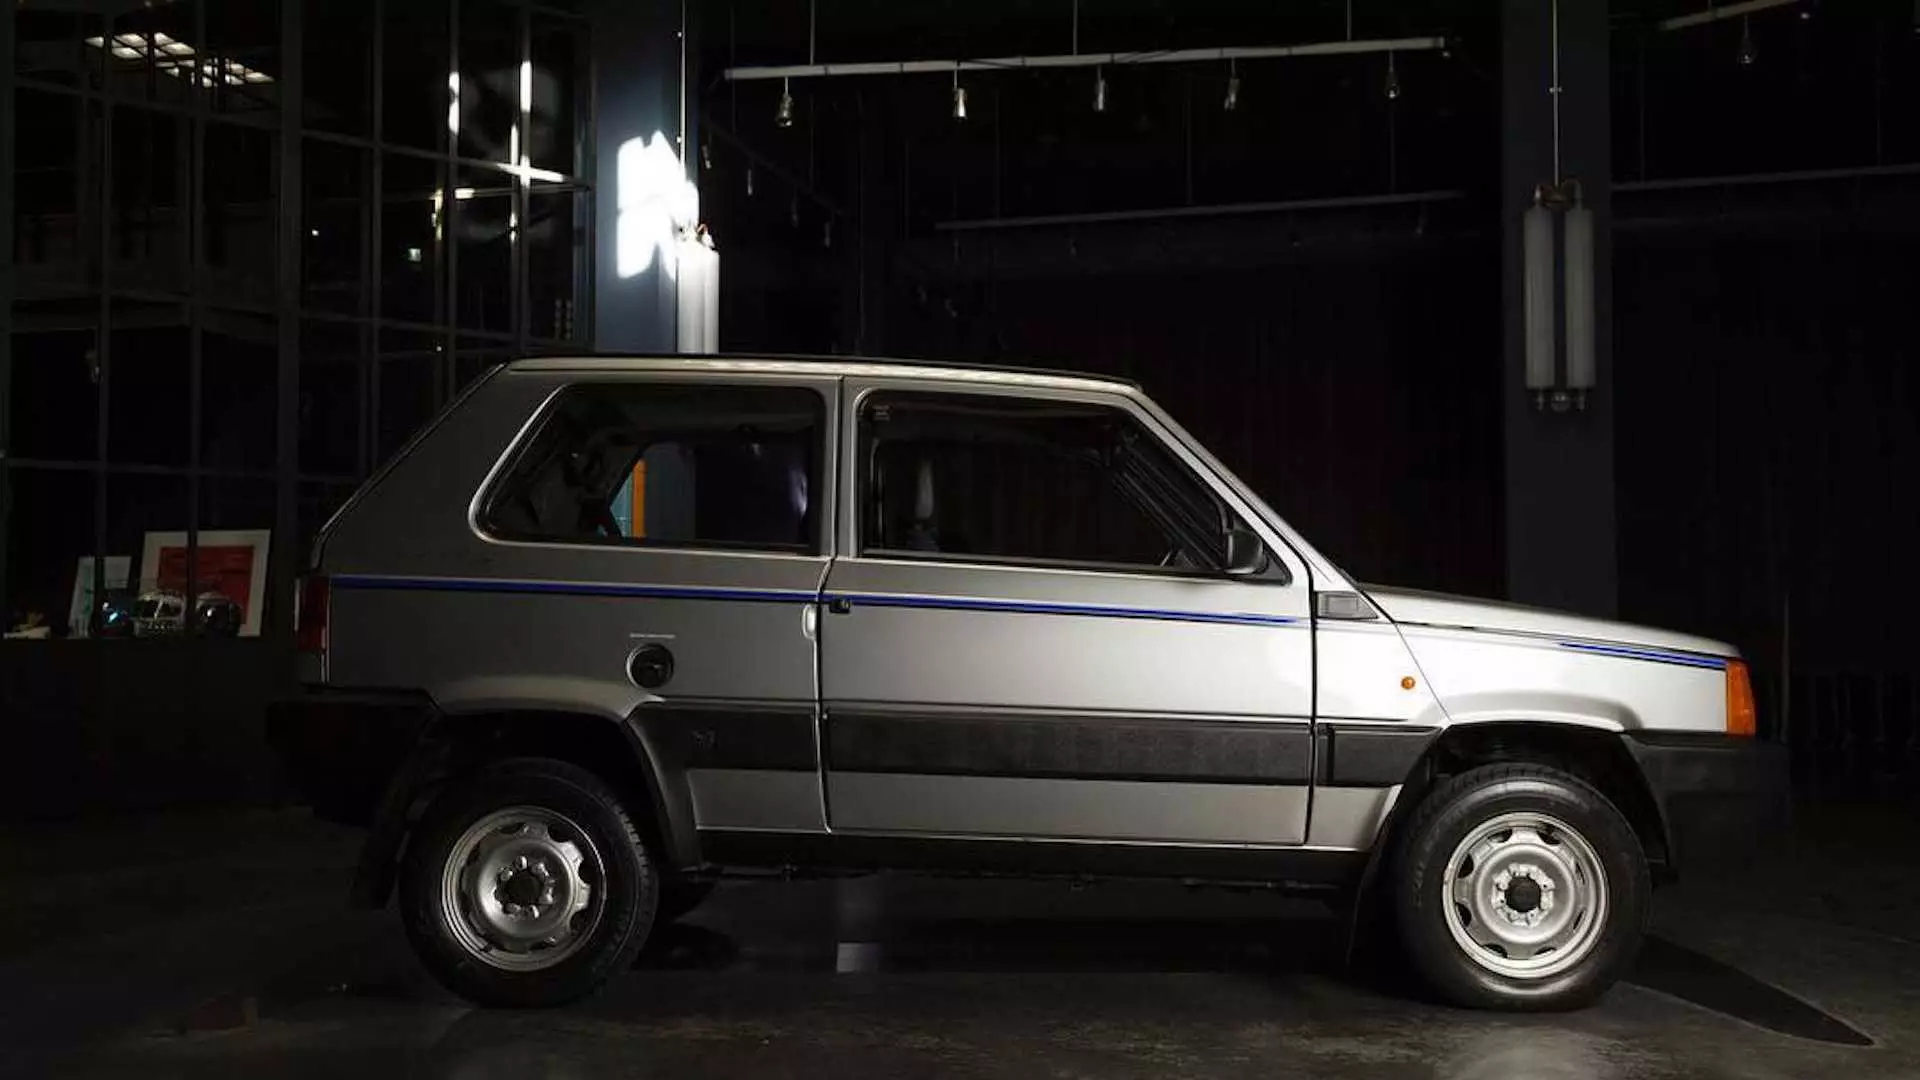 Fiat Panda 4x4 nga Gianni "L'Avvocato" Agnelli restaurohet nga Garage Italia Doganat